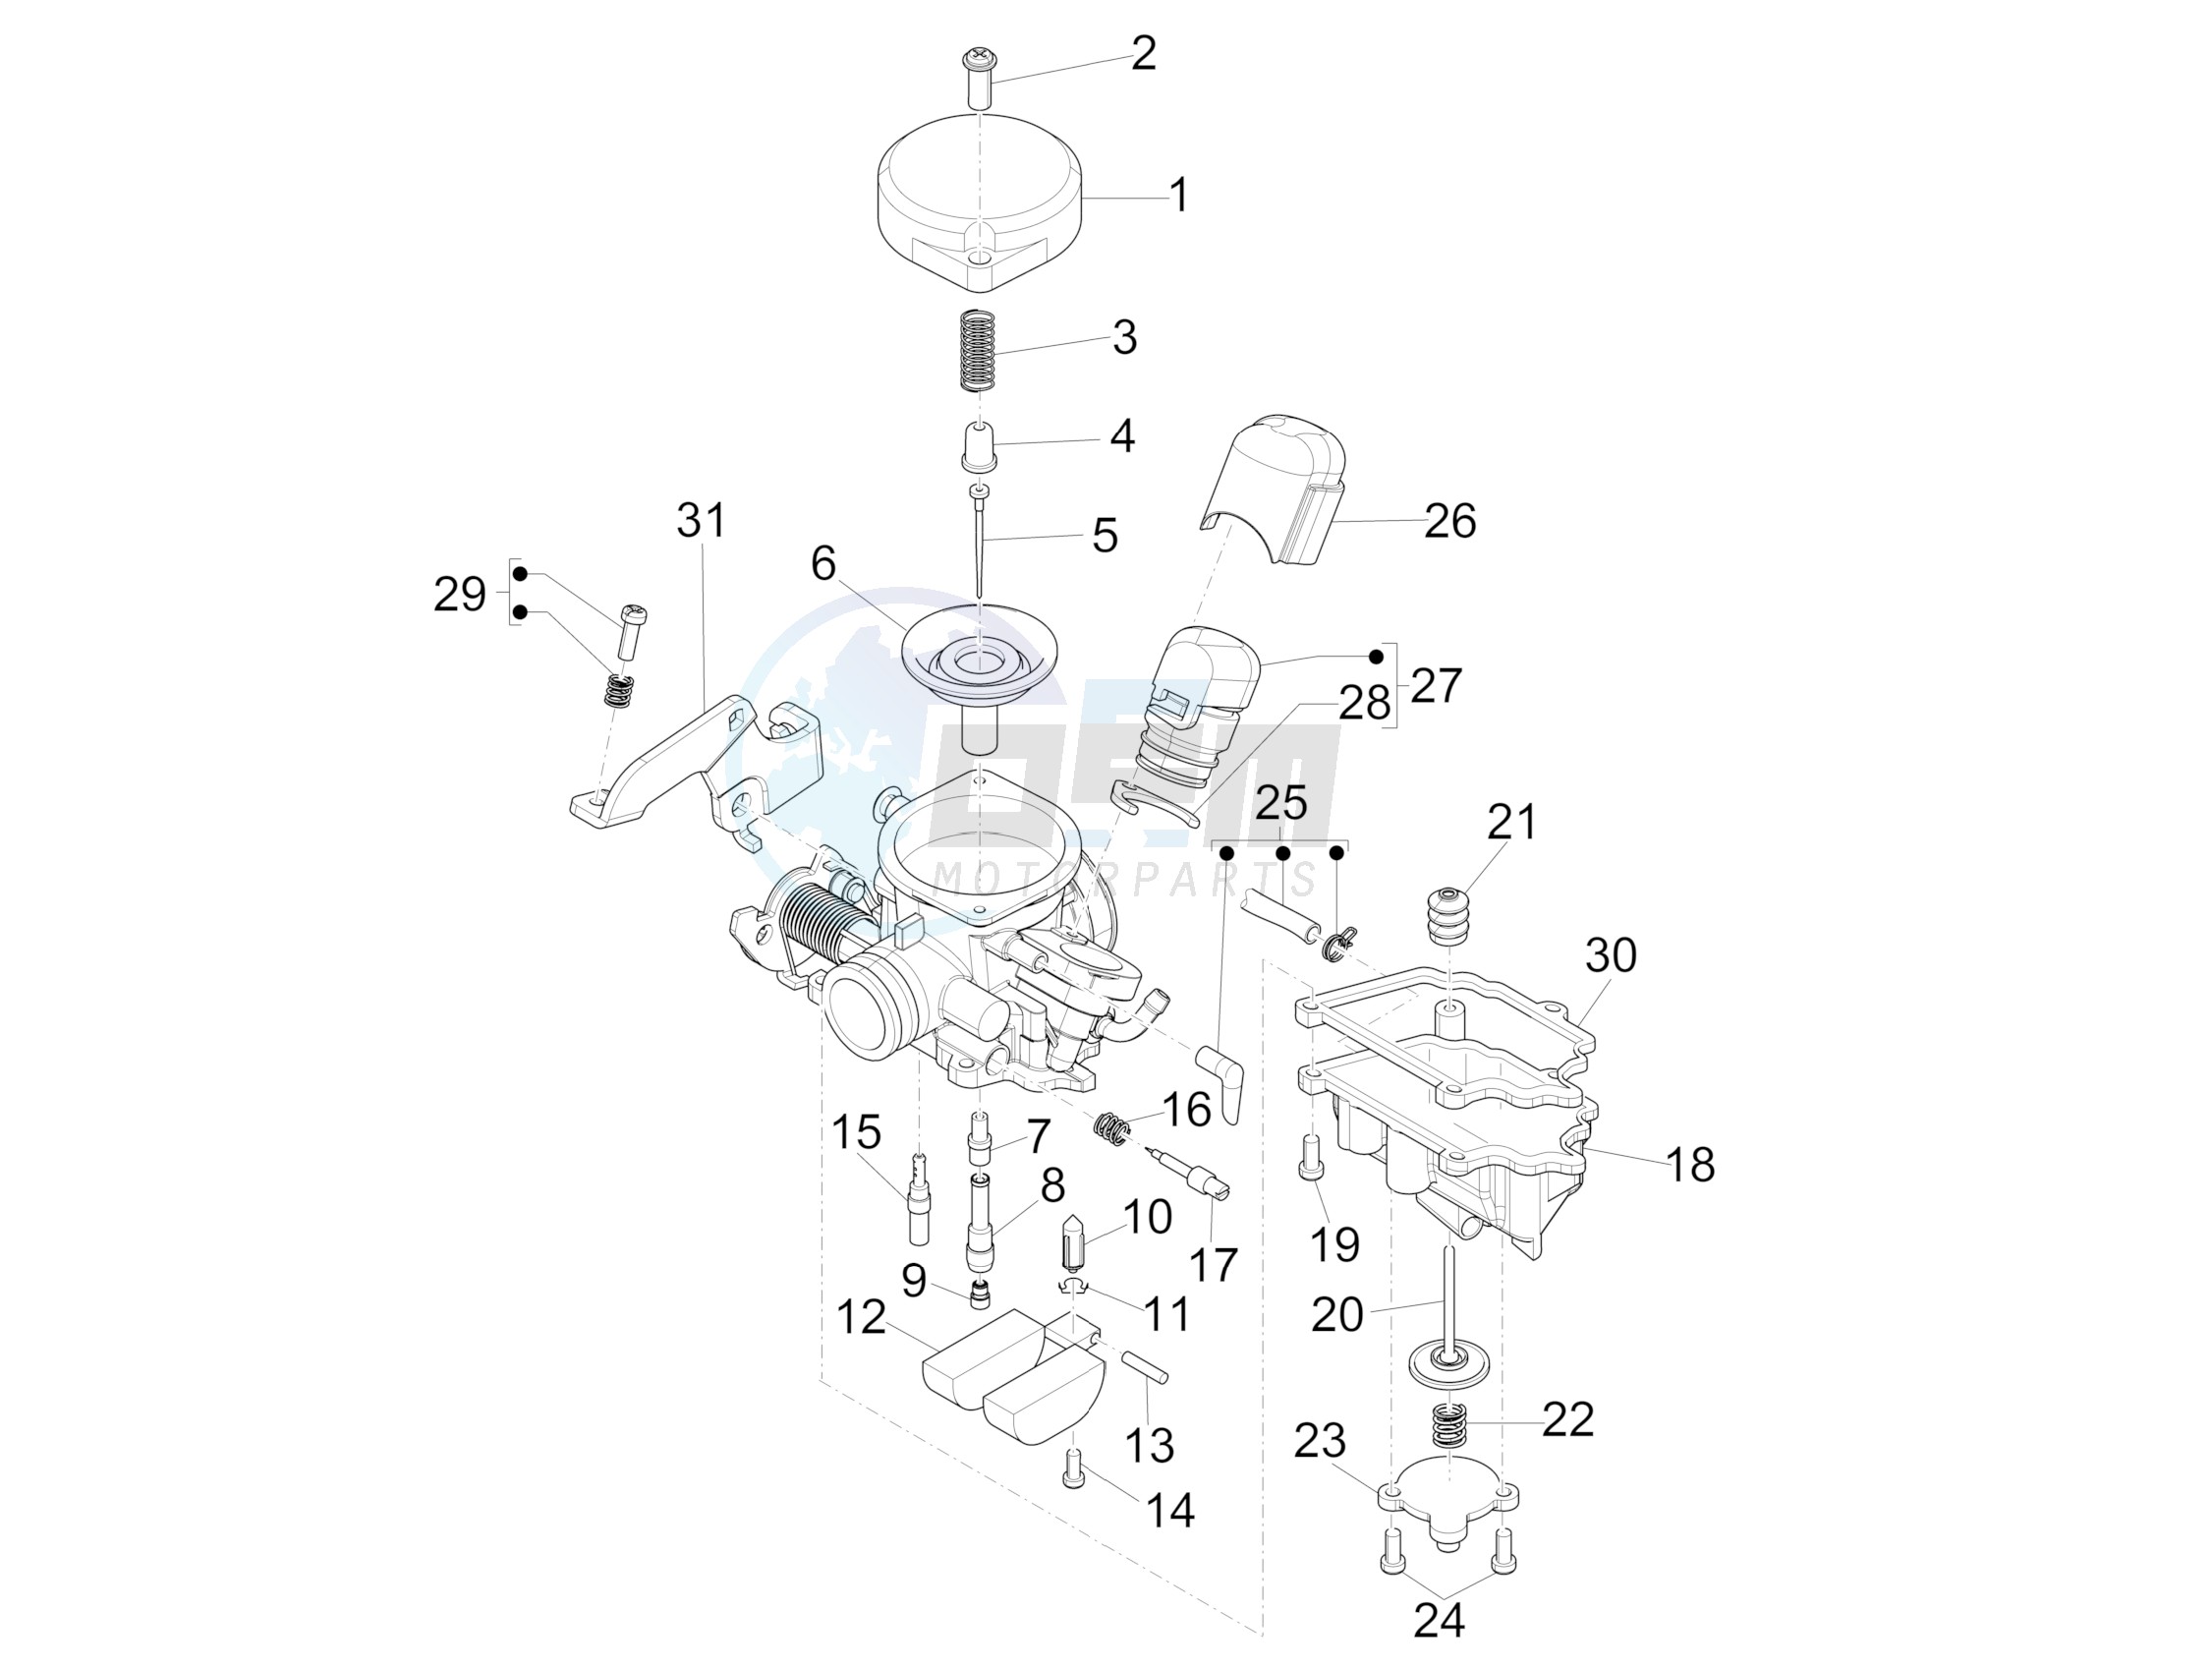 Carburetor's components image